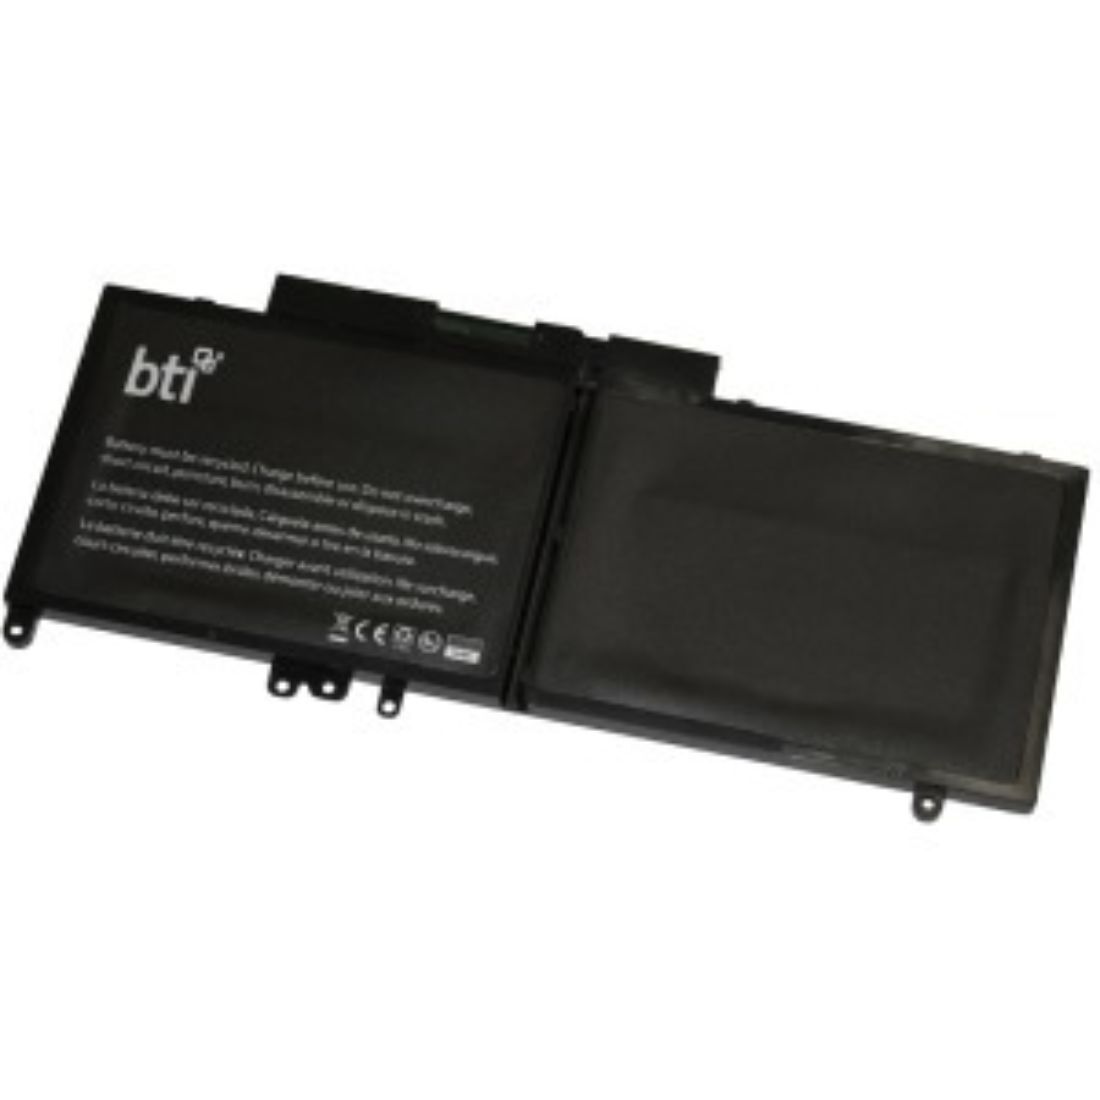 BTI Battery - 5100 mAh - Proprietary Battery Size - Lithium Polymer - 7.4 V DC